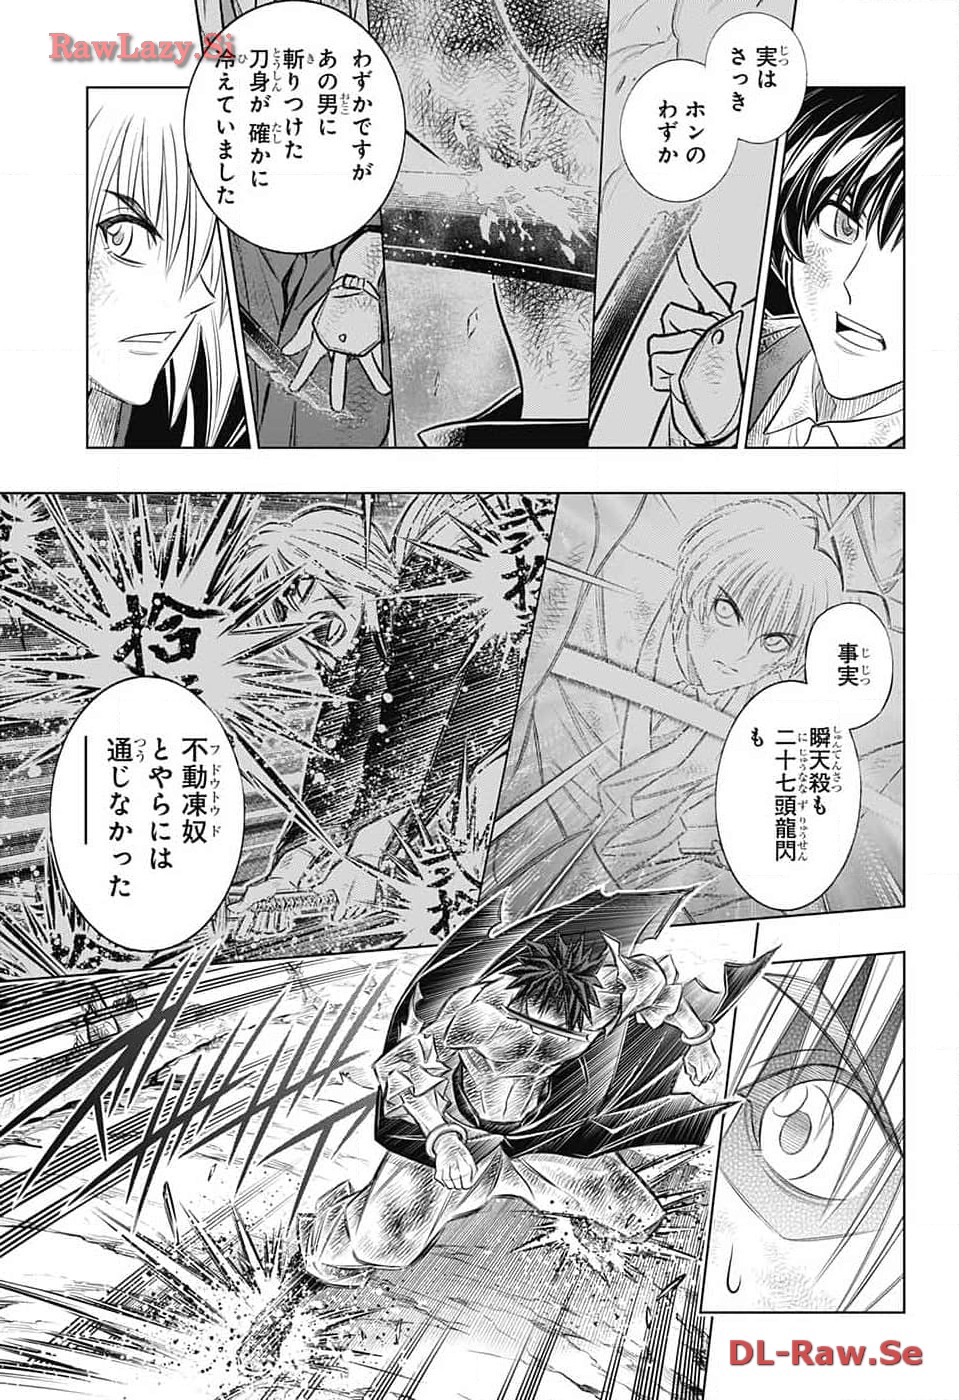 Rurouni Kenshin: Meiji Kenkaku Romantan: Hokkaidou Hen - Chapter 59 - Page 3